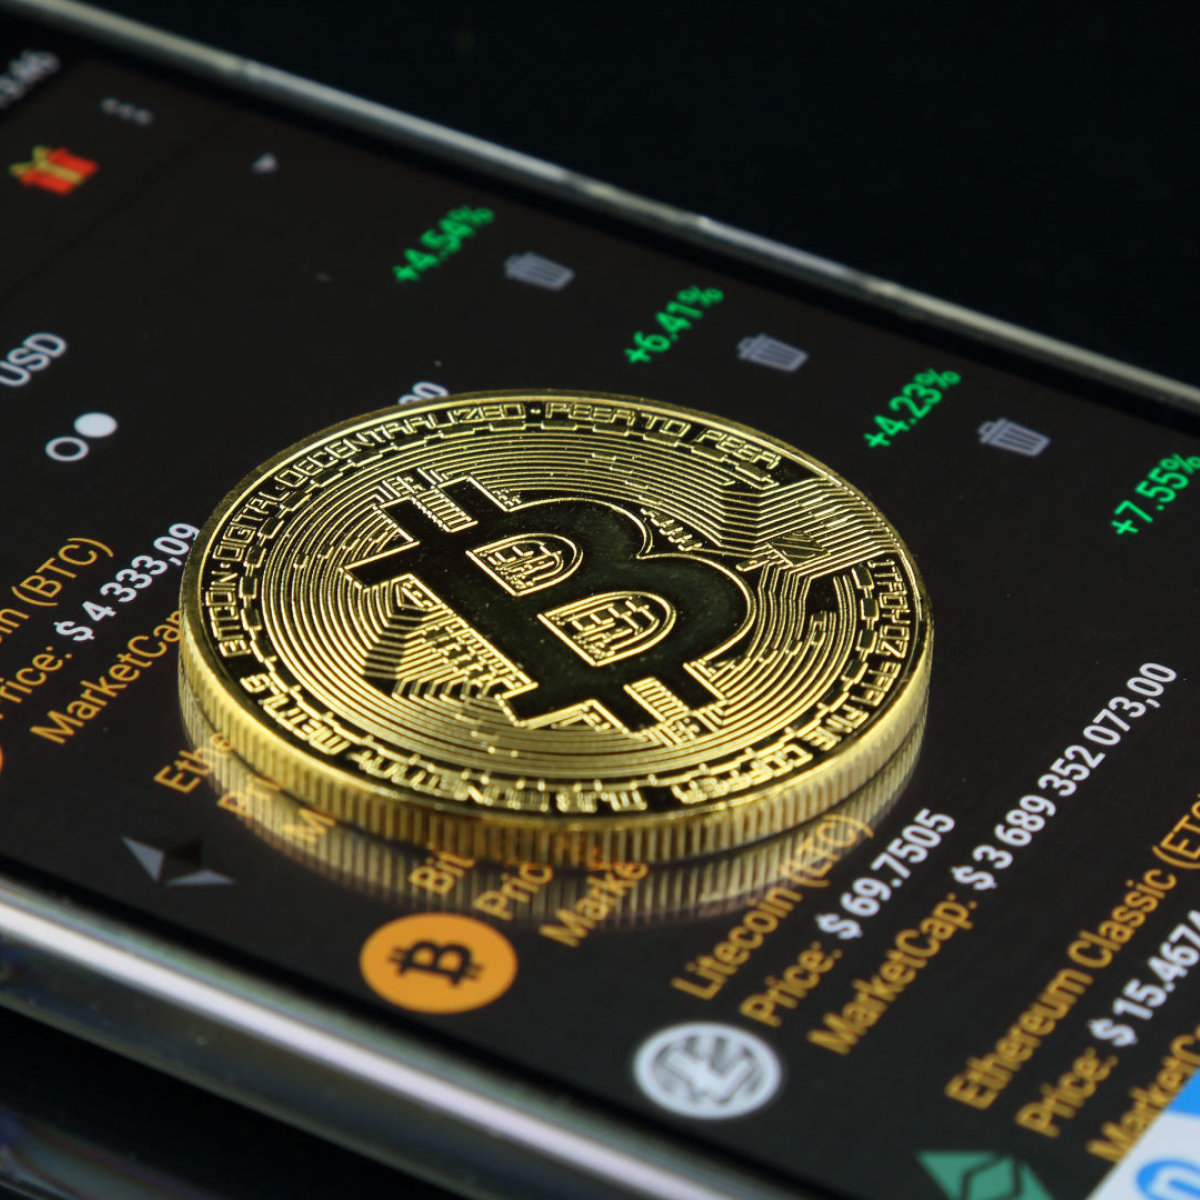 Pirkti Bitcoin, Ethereum, Litecoin ar kitas kriptovaliutas | Bitcoin Baltic